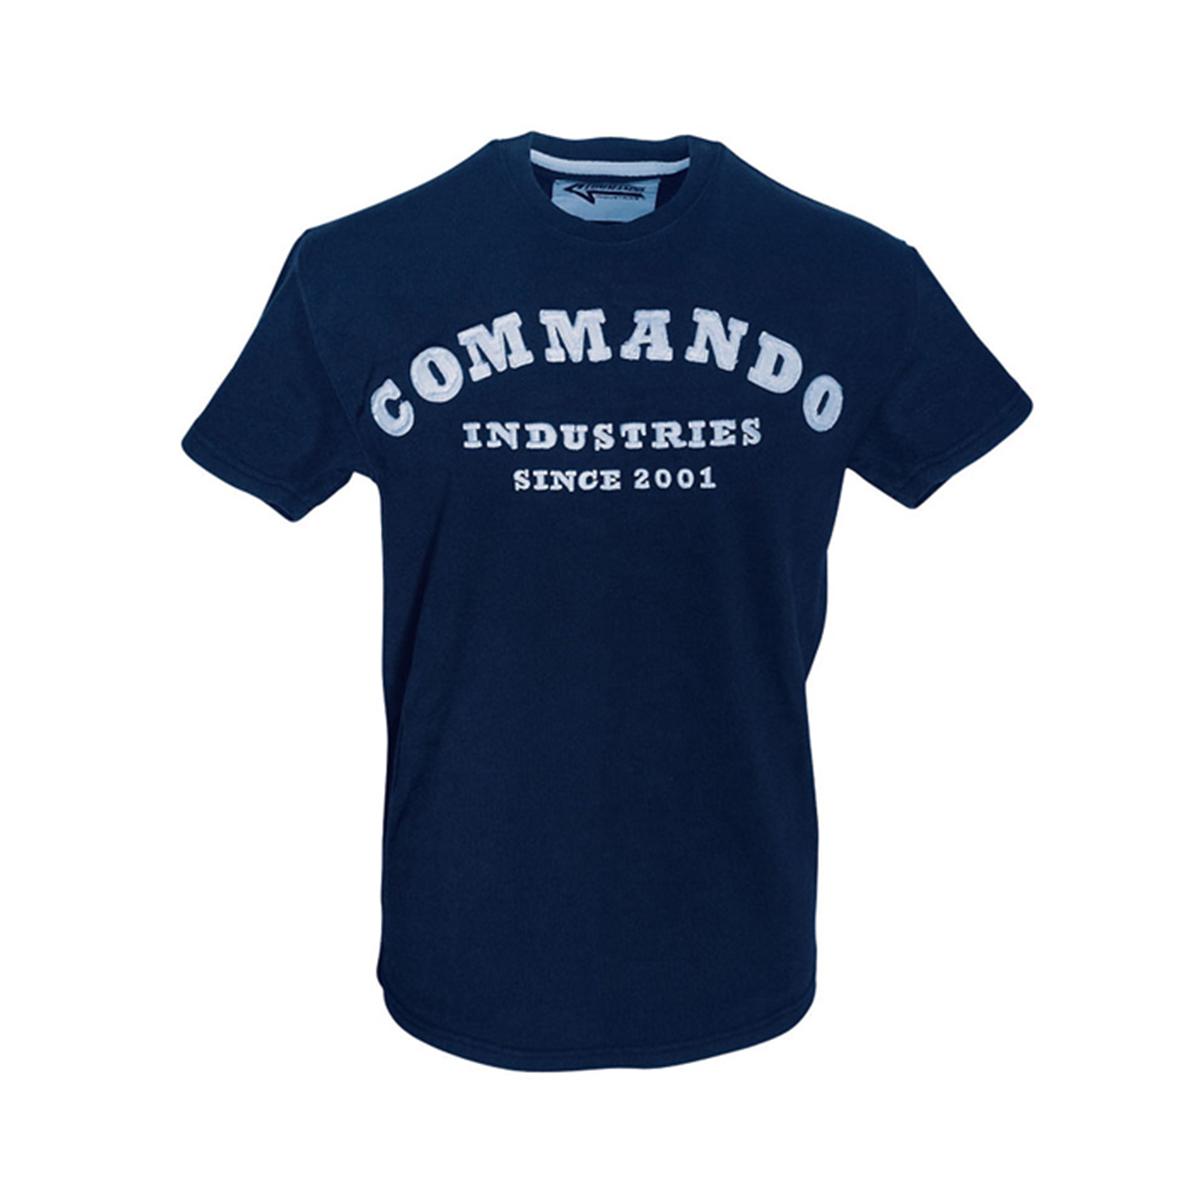 Commando - T-Shirt - Vintage 2001 - navy